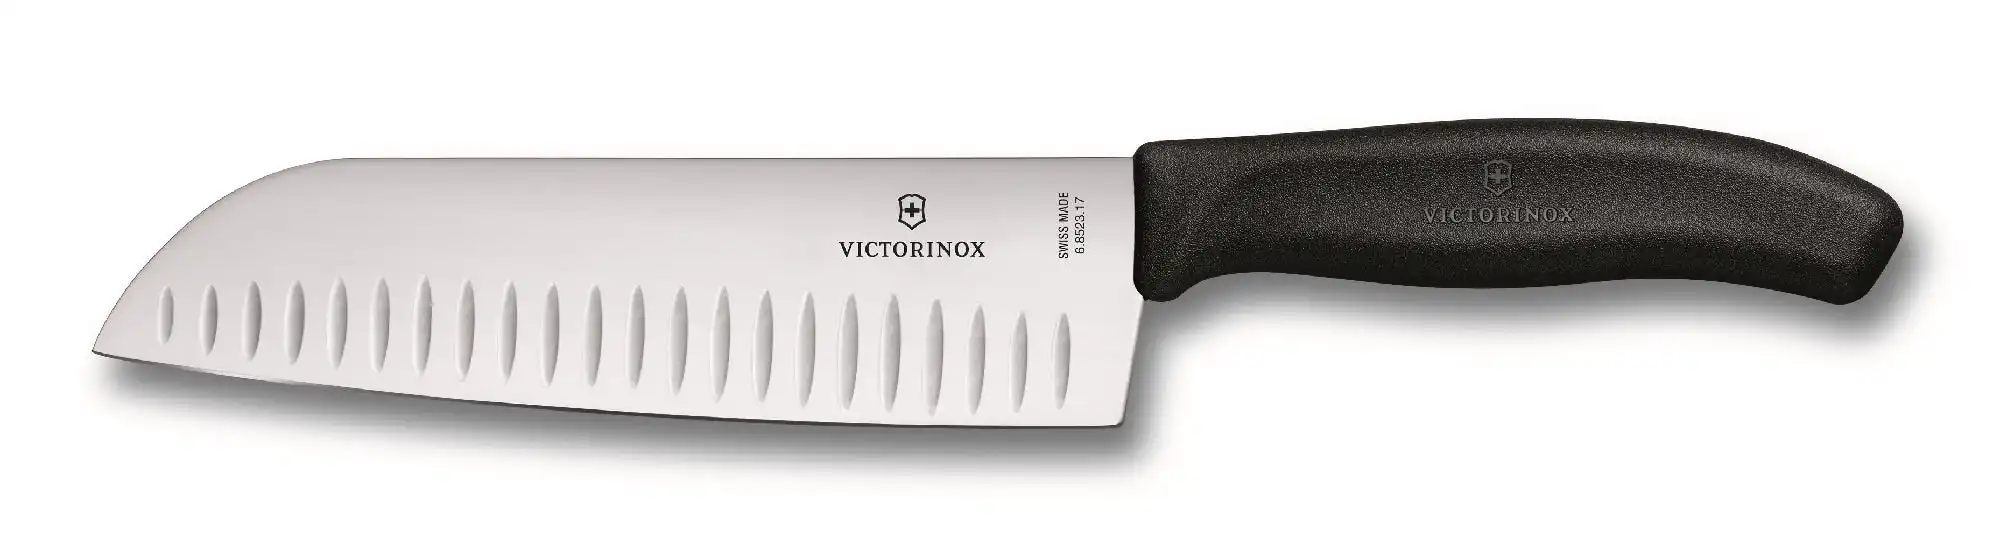 Victorinox Santoku Knife Fluted Wide Blade 17cm - Black